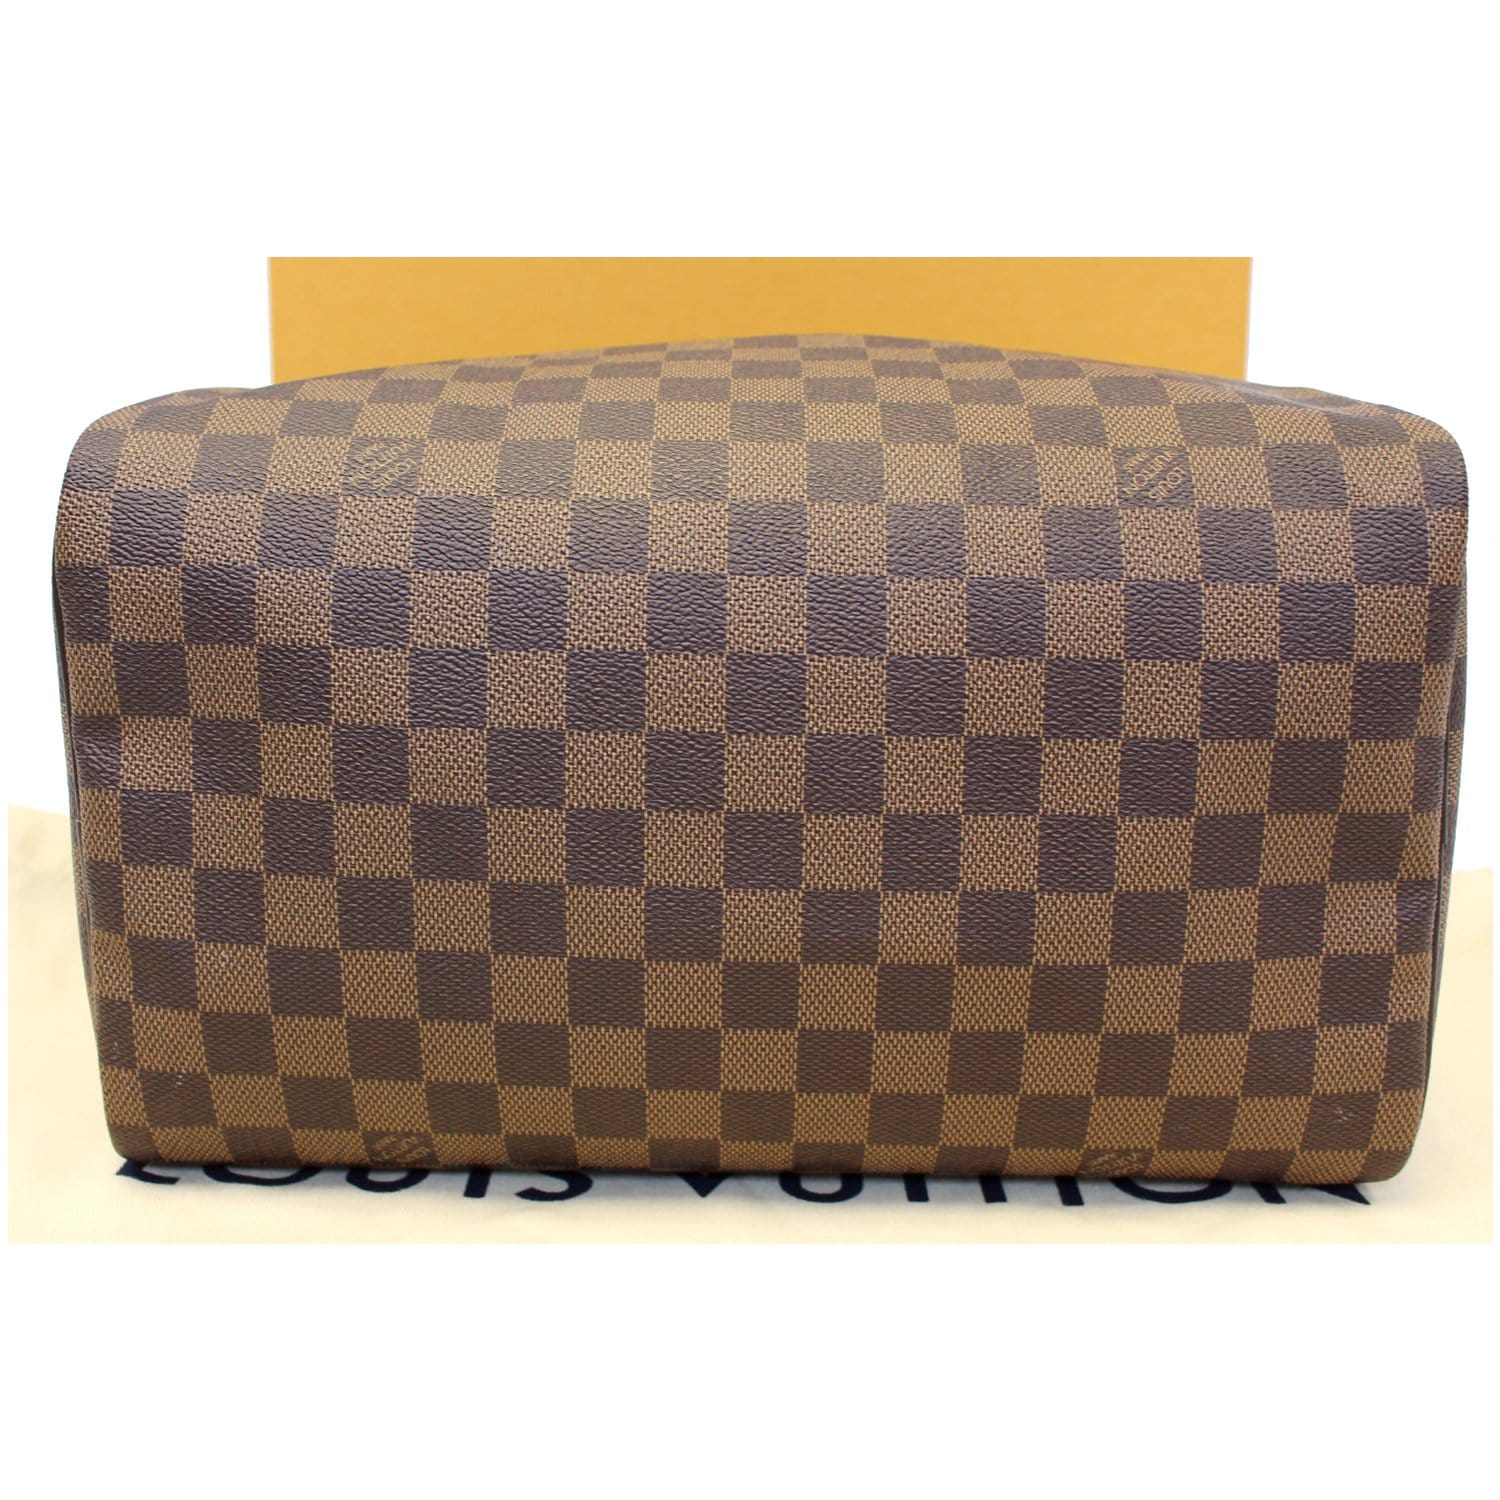 Louis Vuitton Speedy 30 Handbag in Ebene Monogram Canvas and Brown